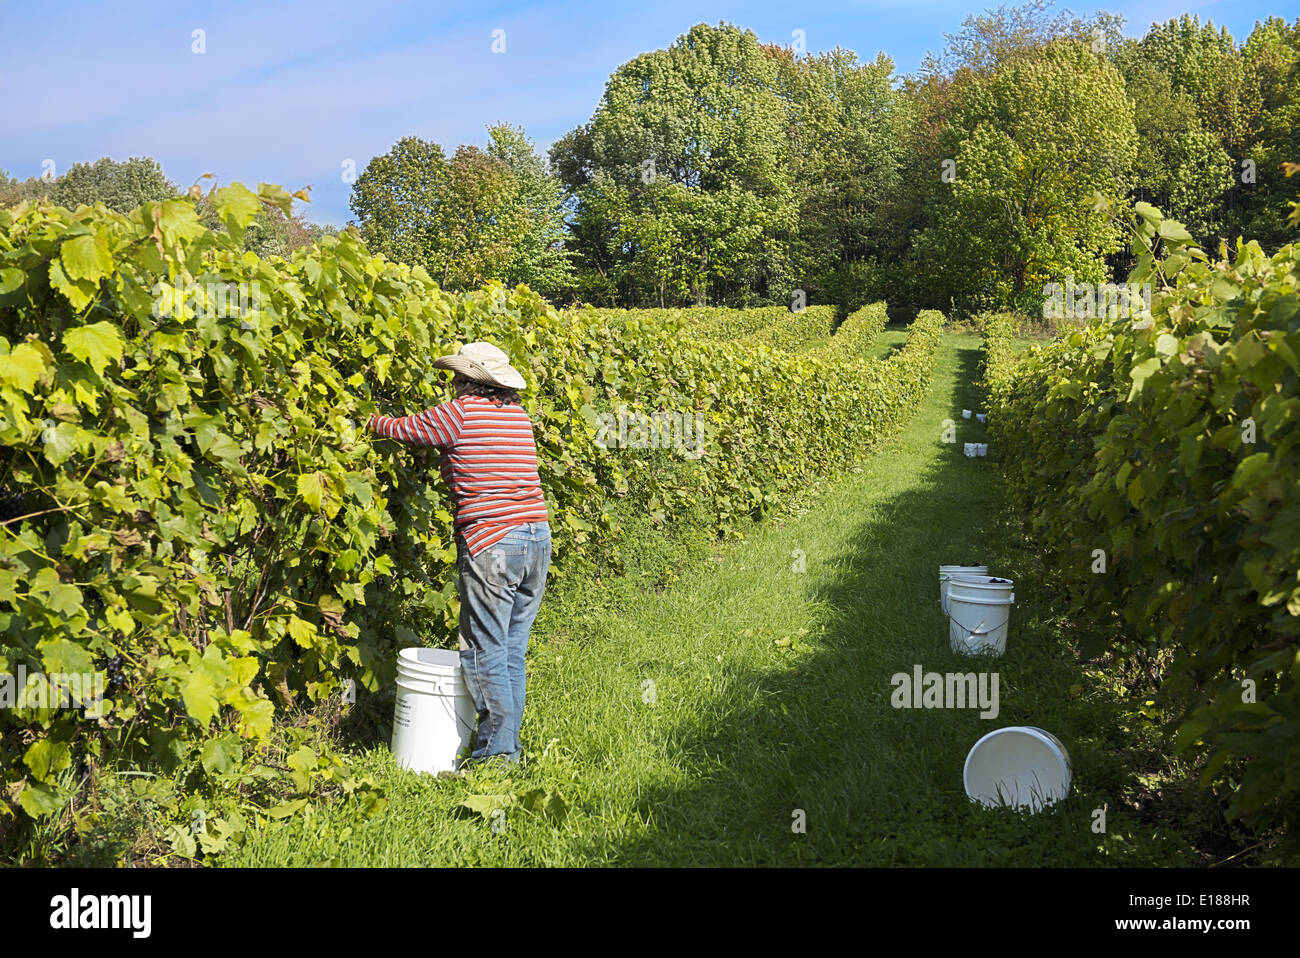 Grape - picker in vineyard Stock Photo